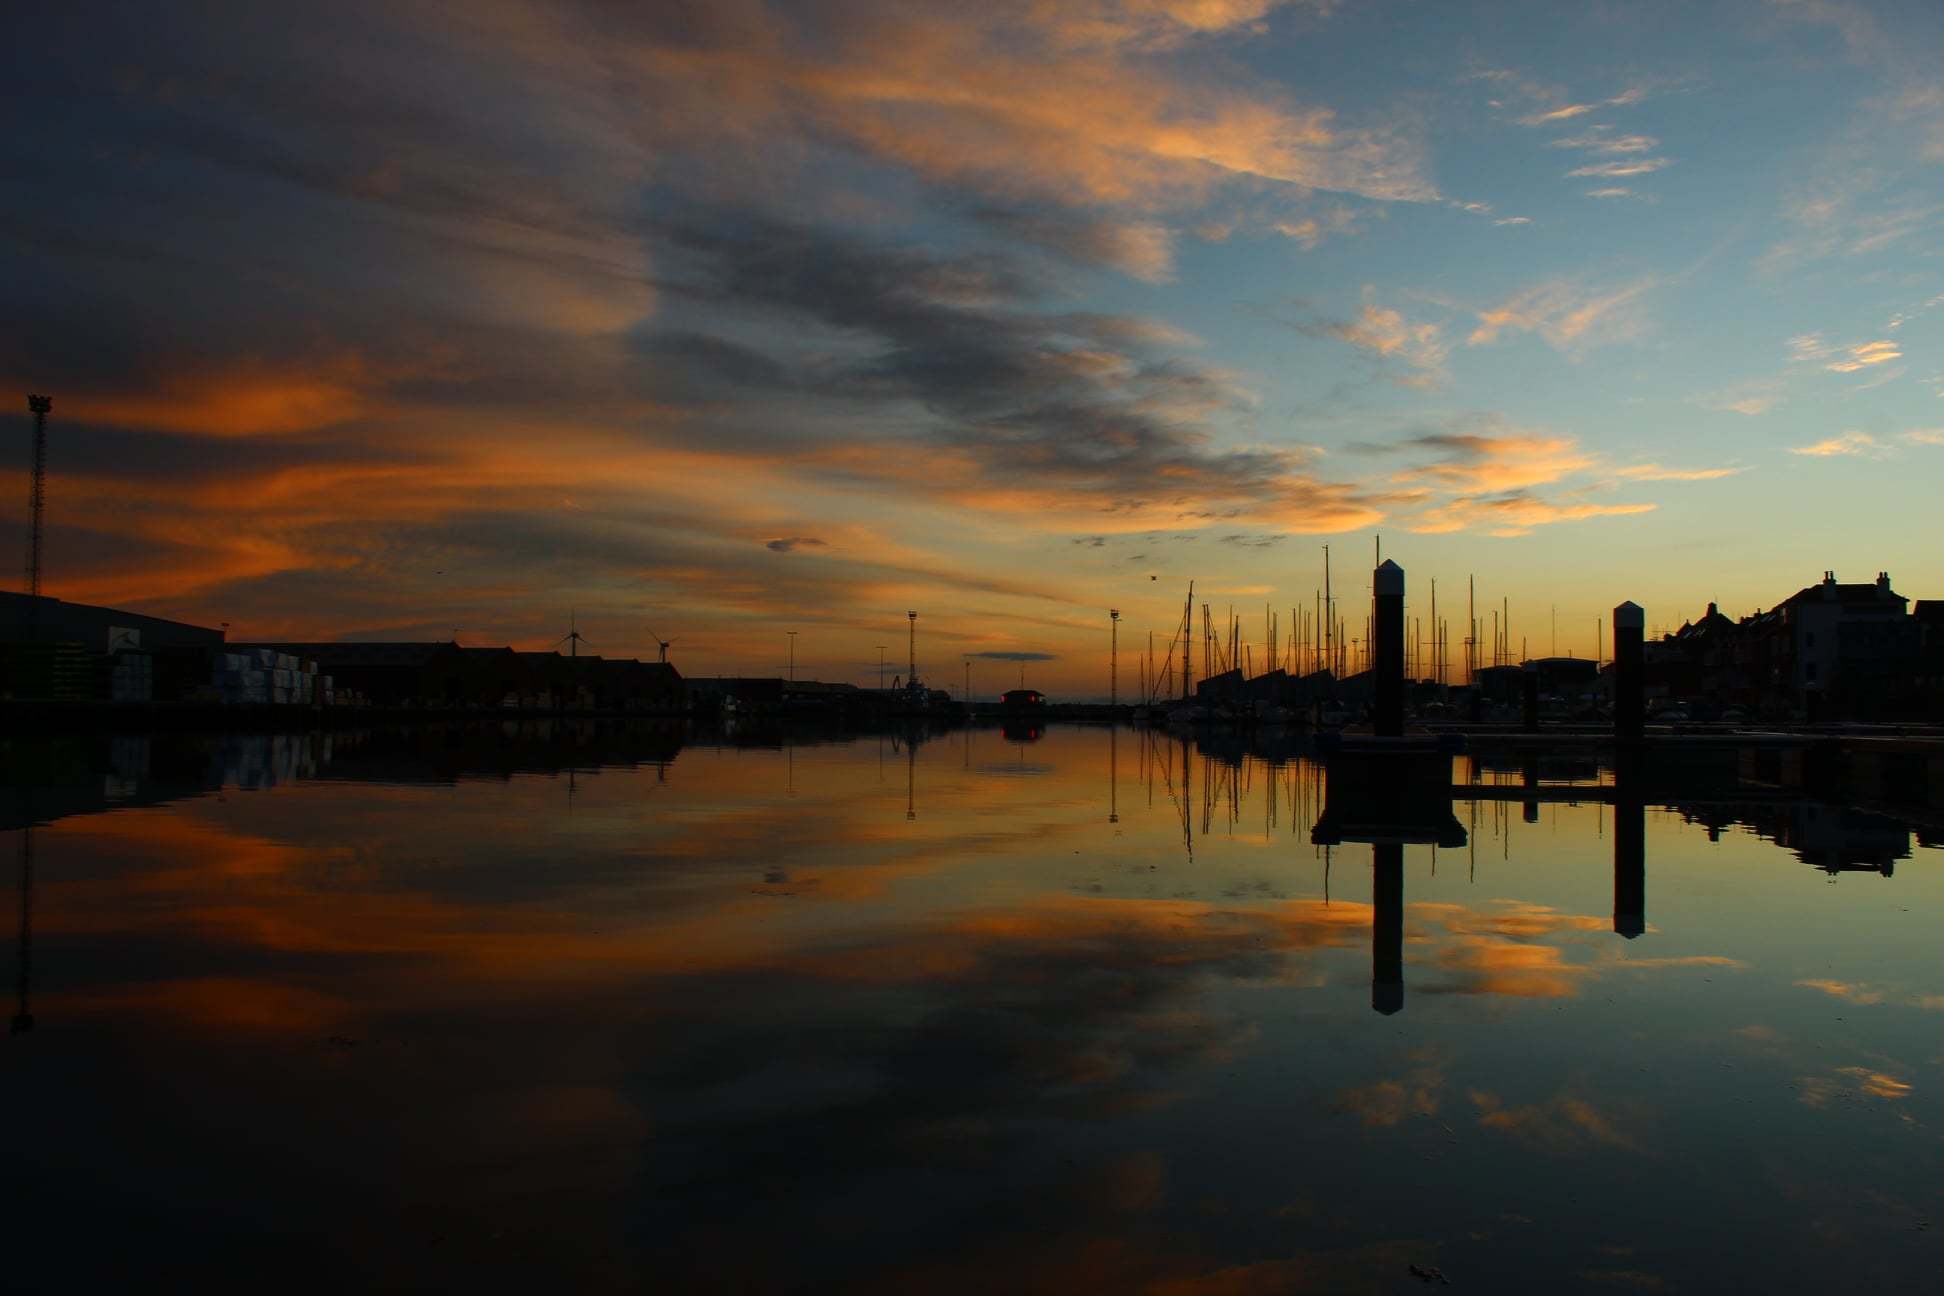 Danka Pogorzelec took this fantastic shot of Shoreham Port